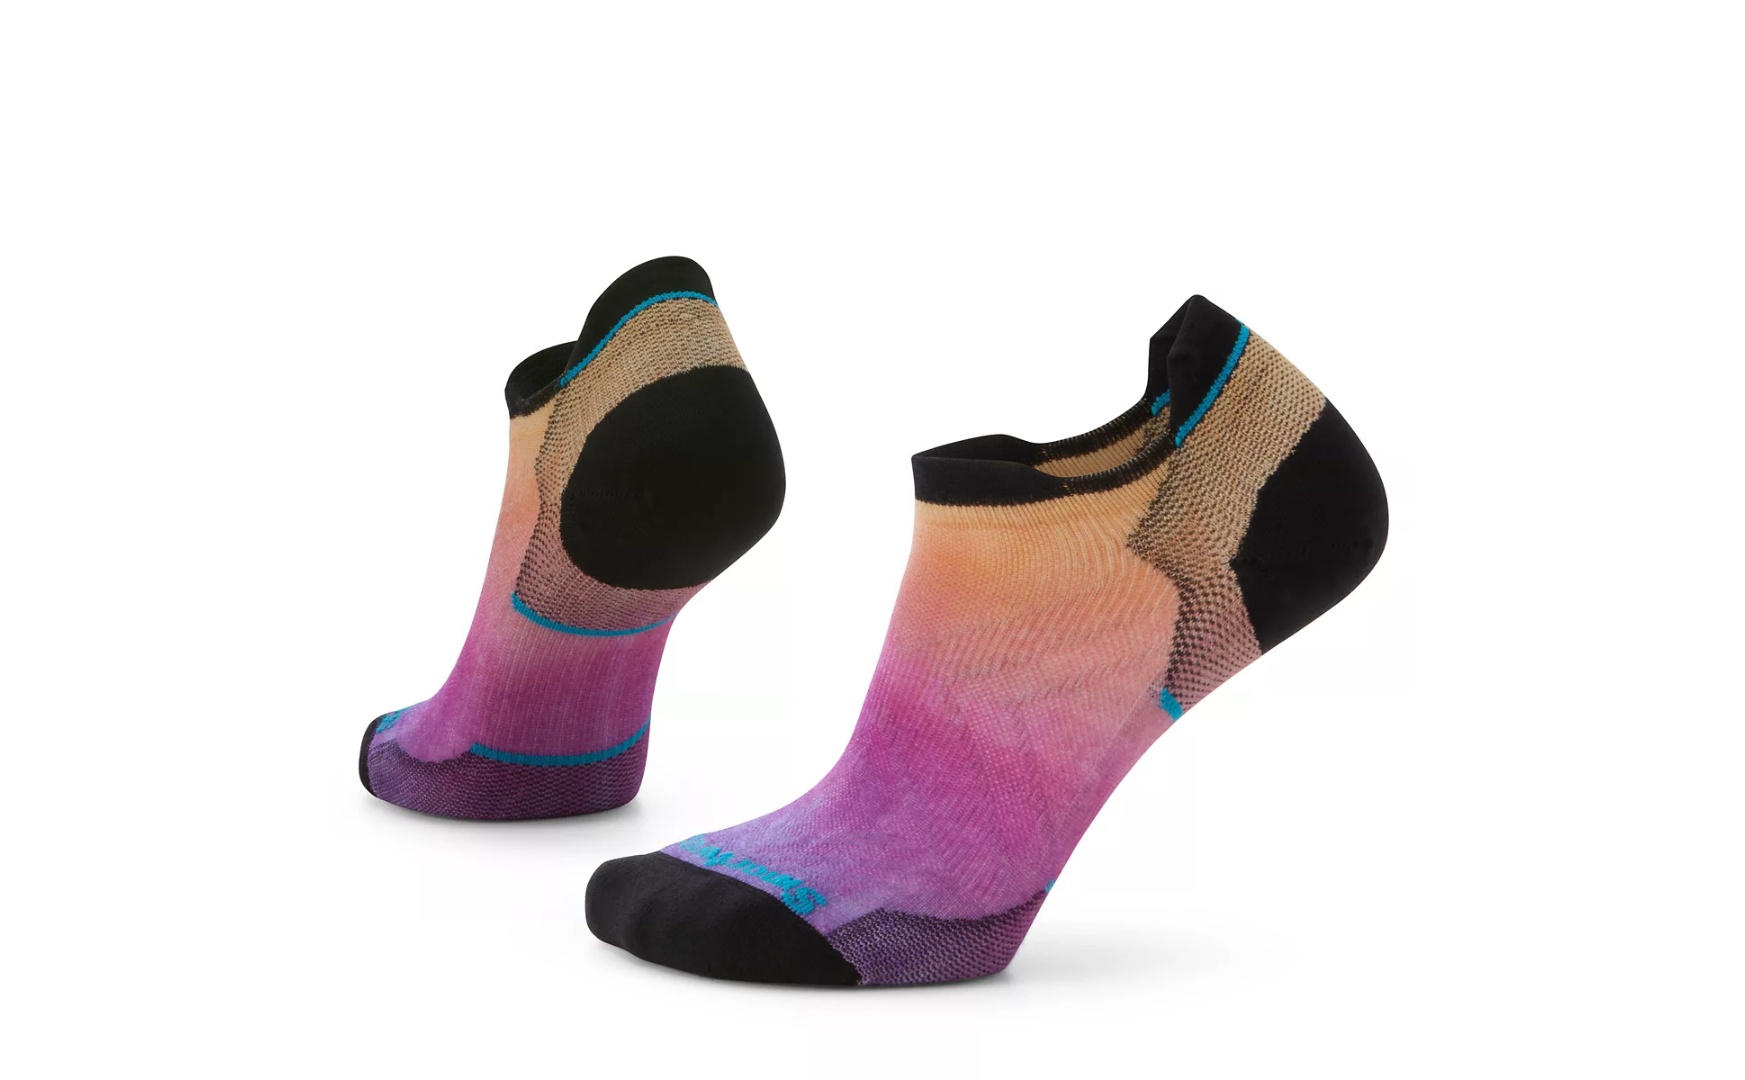 Smartwool PhD Run Light Elite Striped Micro Socks - Capri